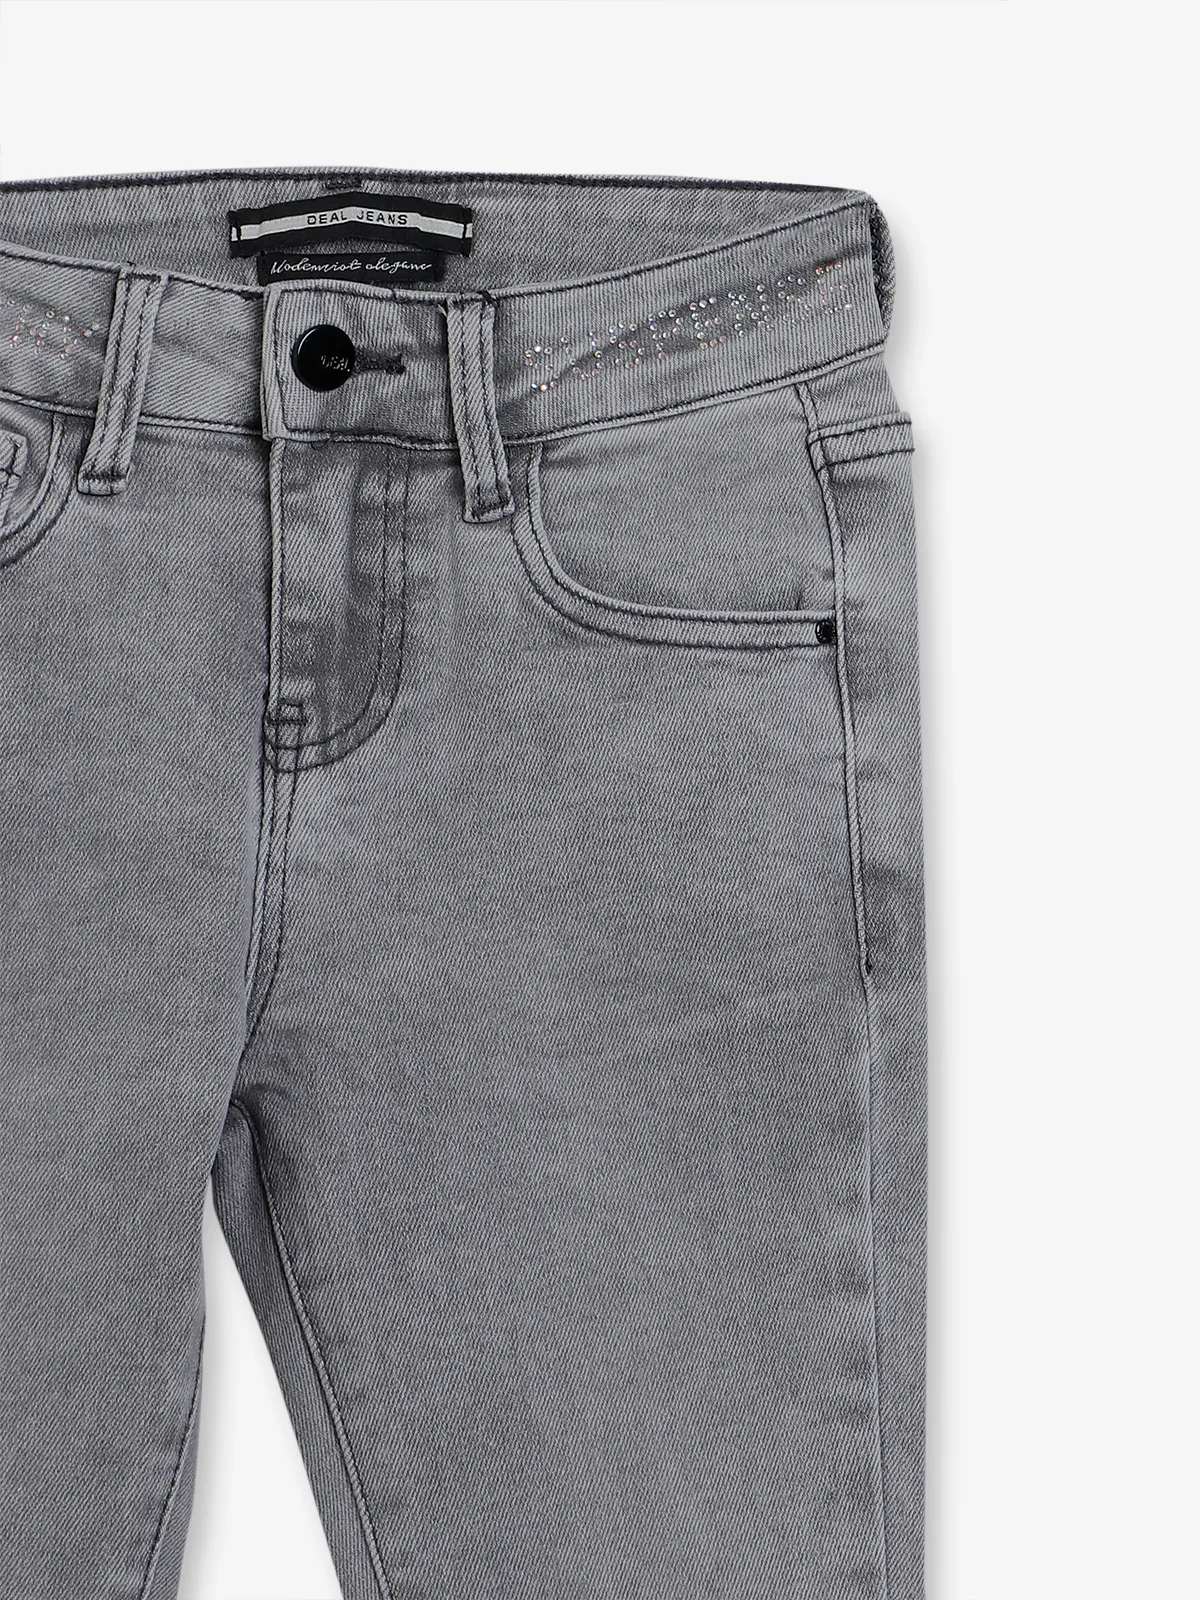 Deal grey denim slim fit jeans